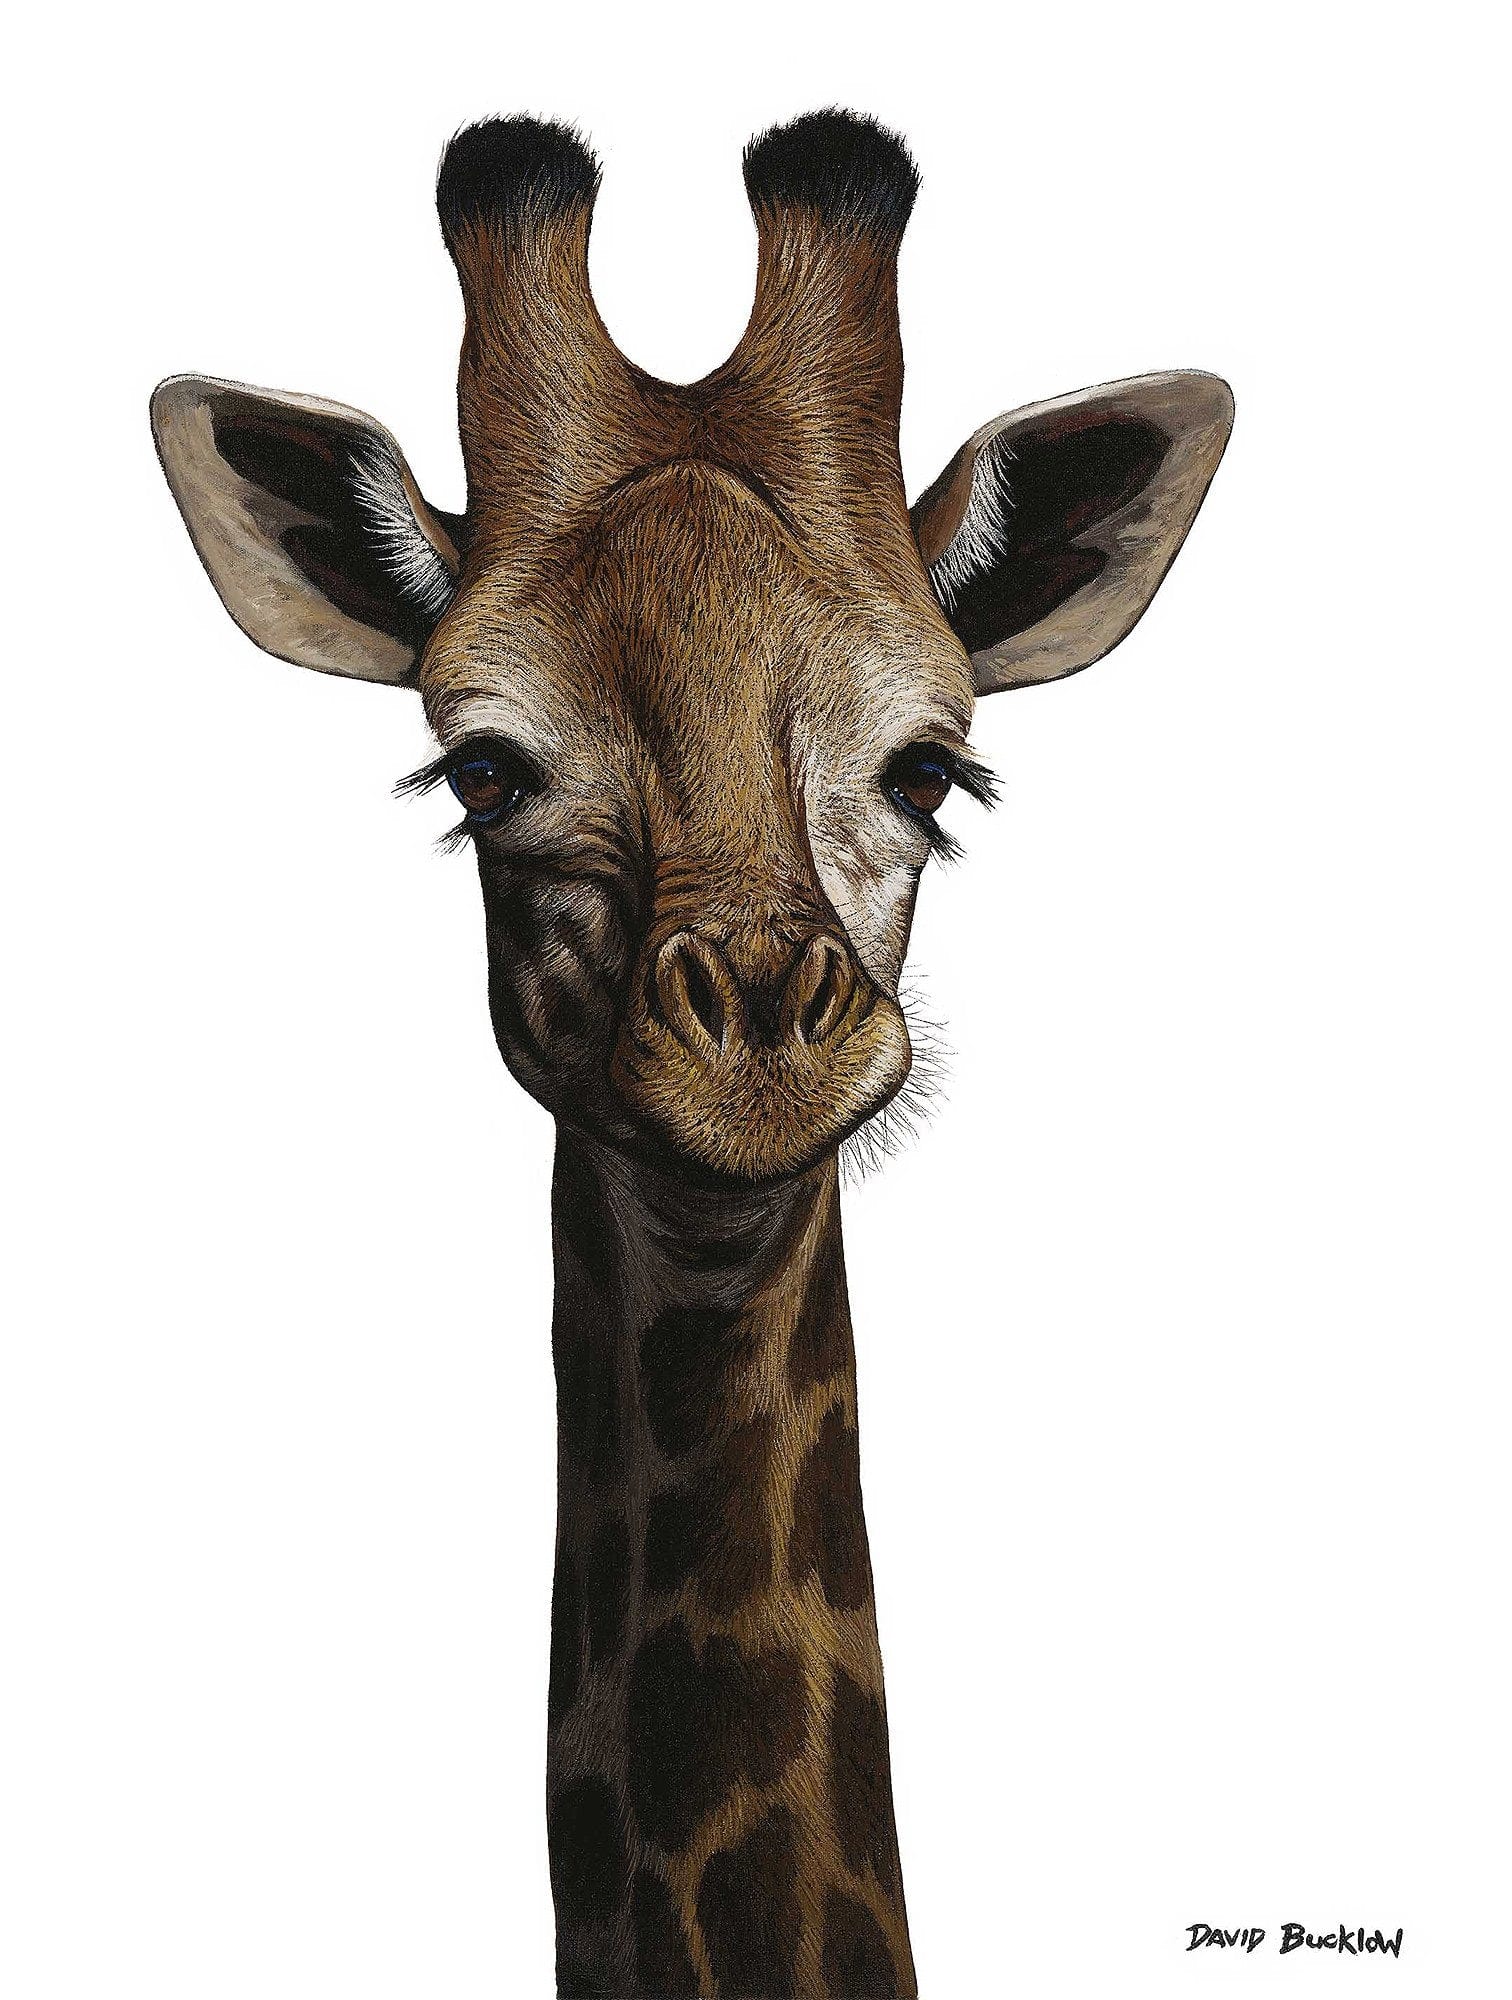 South African Limited Editions by David Bucklow - Graceful One- Giraffe - Fine Art Portfolio